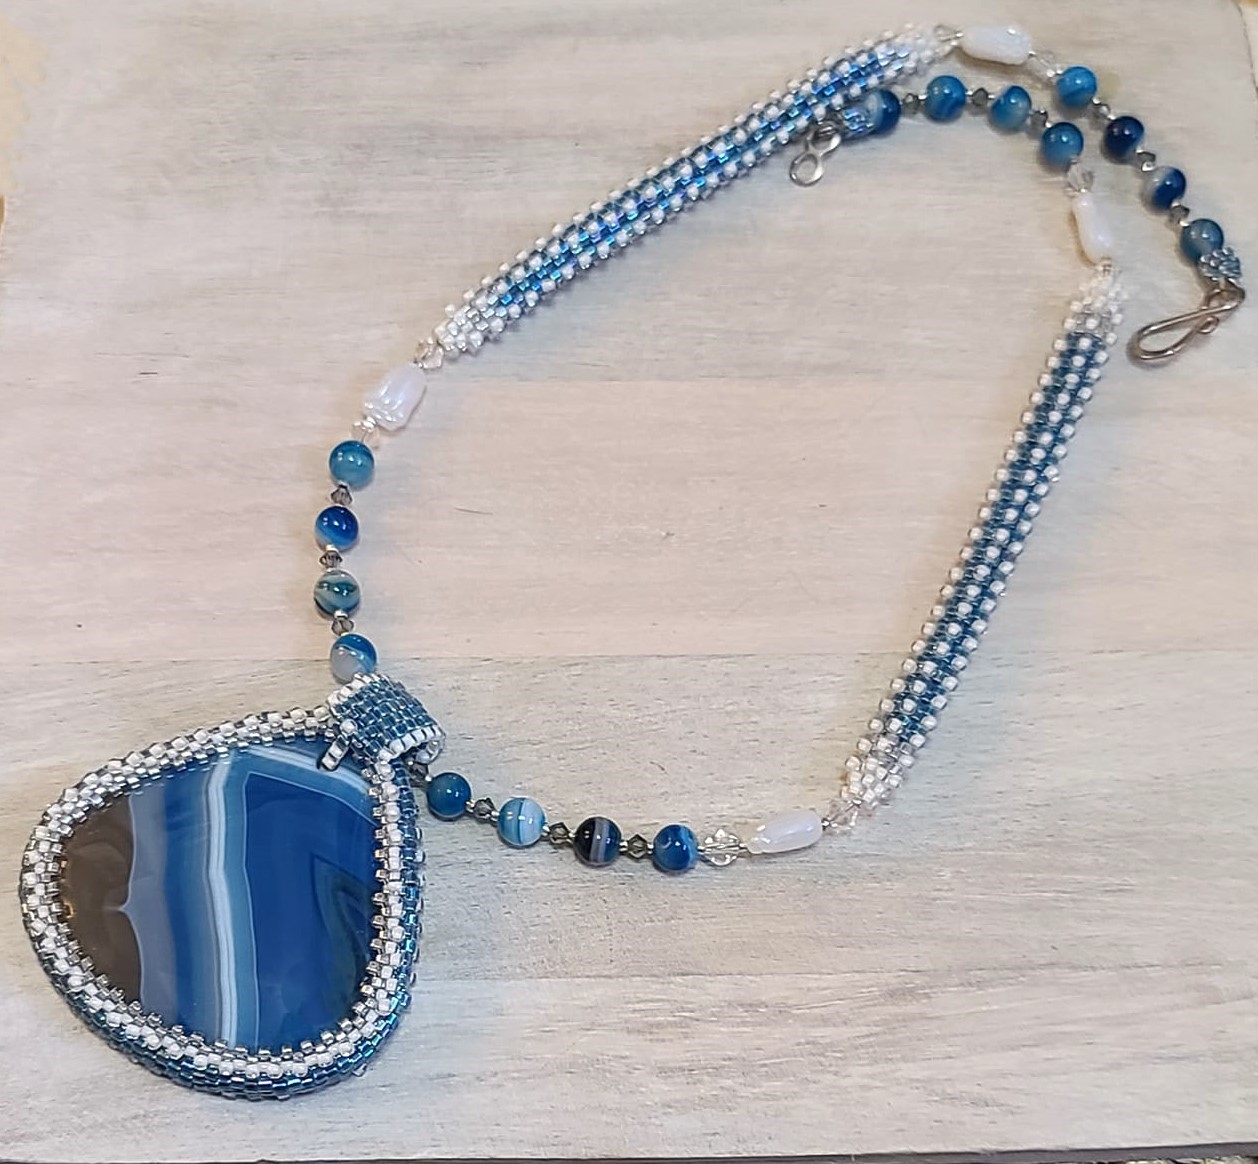 Gemstone necklace, pendant blue agate, with miyuki glass beads